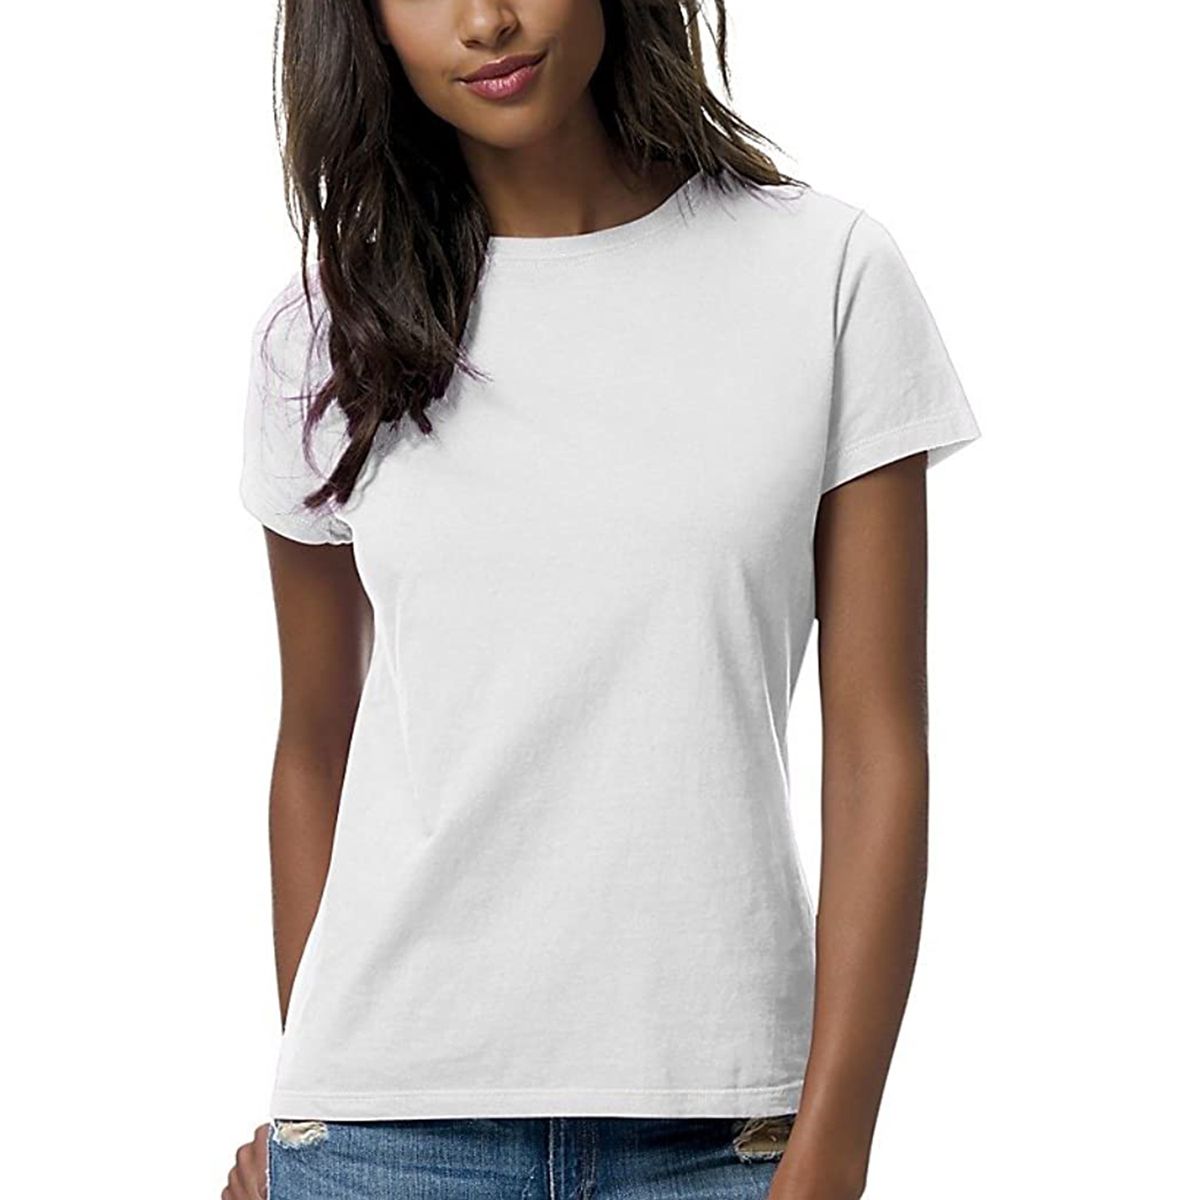 Eoeth Big Sale!Women Tshirt Summer Fashion Bow Solid T Shirt O-Neck Sleeveless Shirts Top Lightweight Simple Quick-Dry Tee